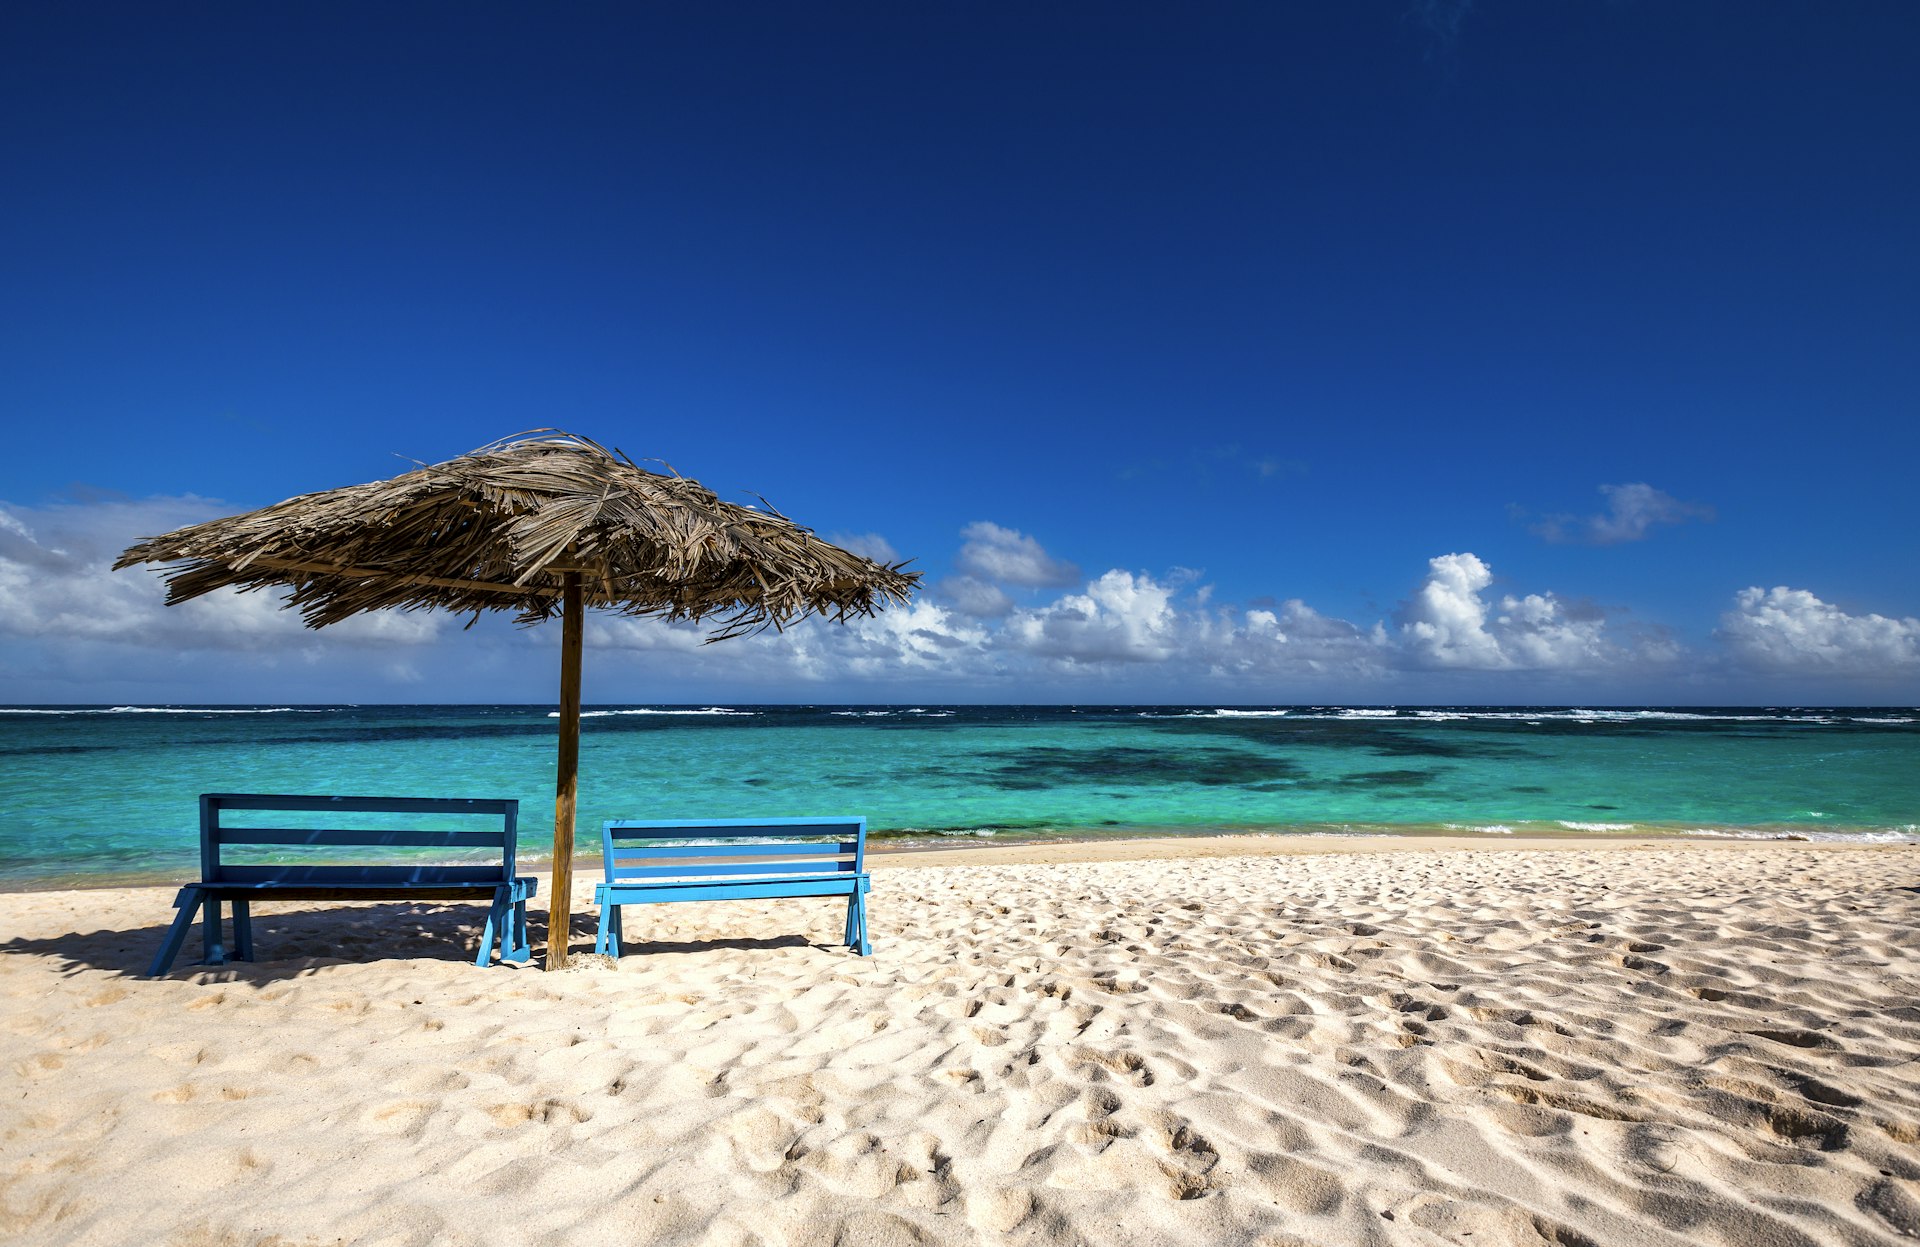 Loblolly beach on island Anegada in the British Virgin Islands.